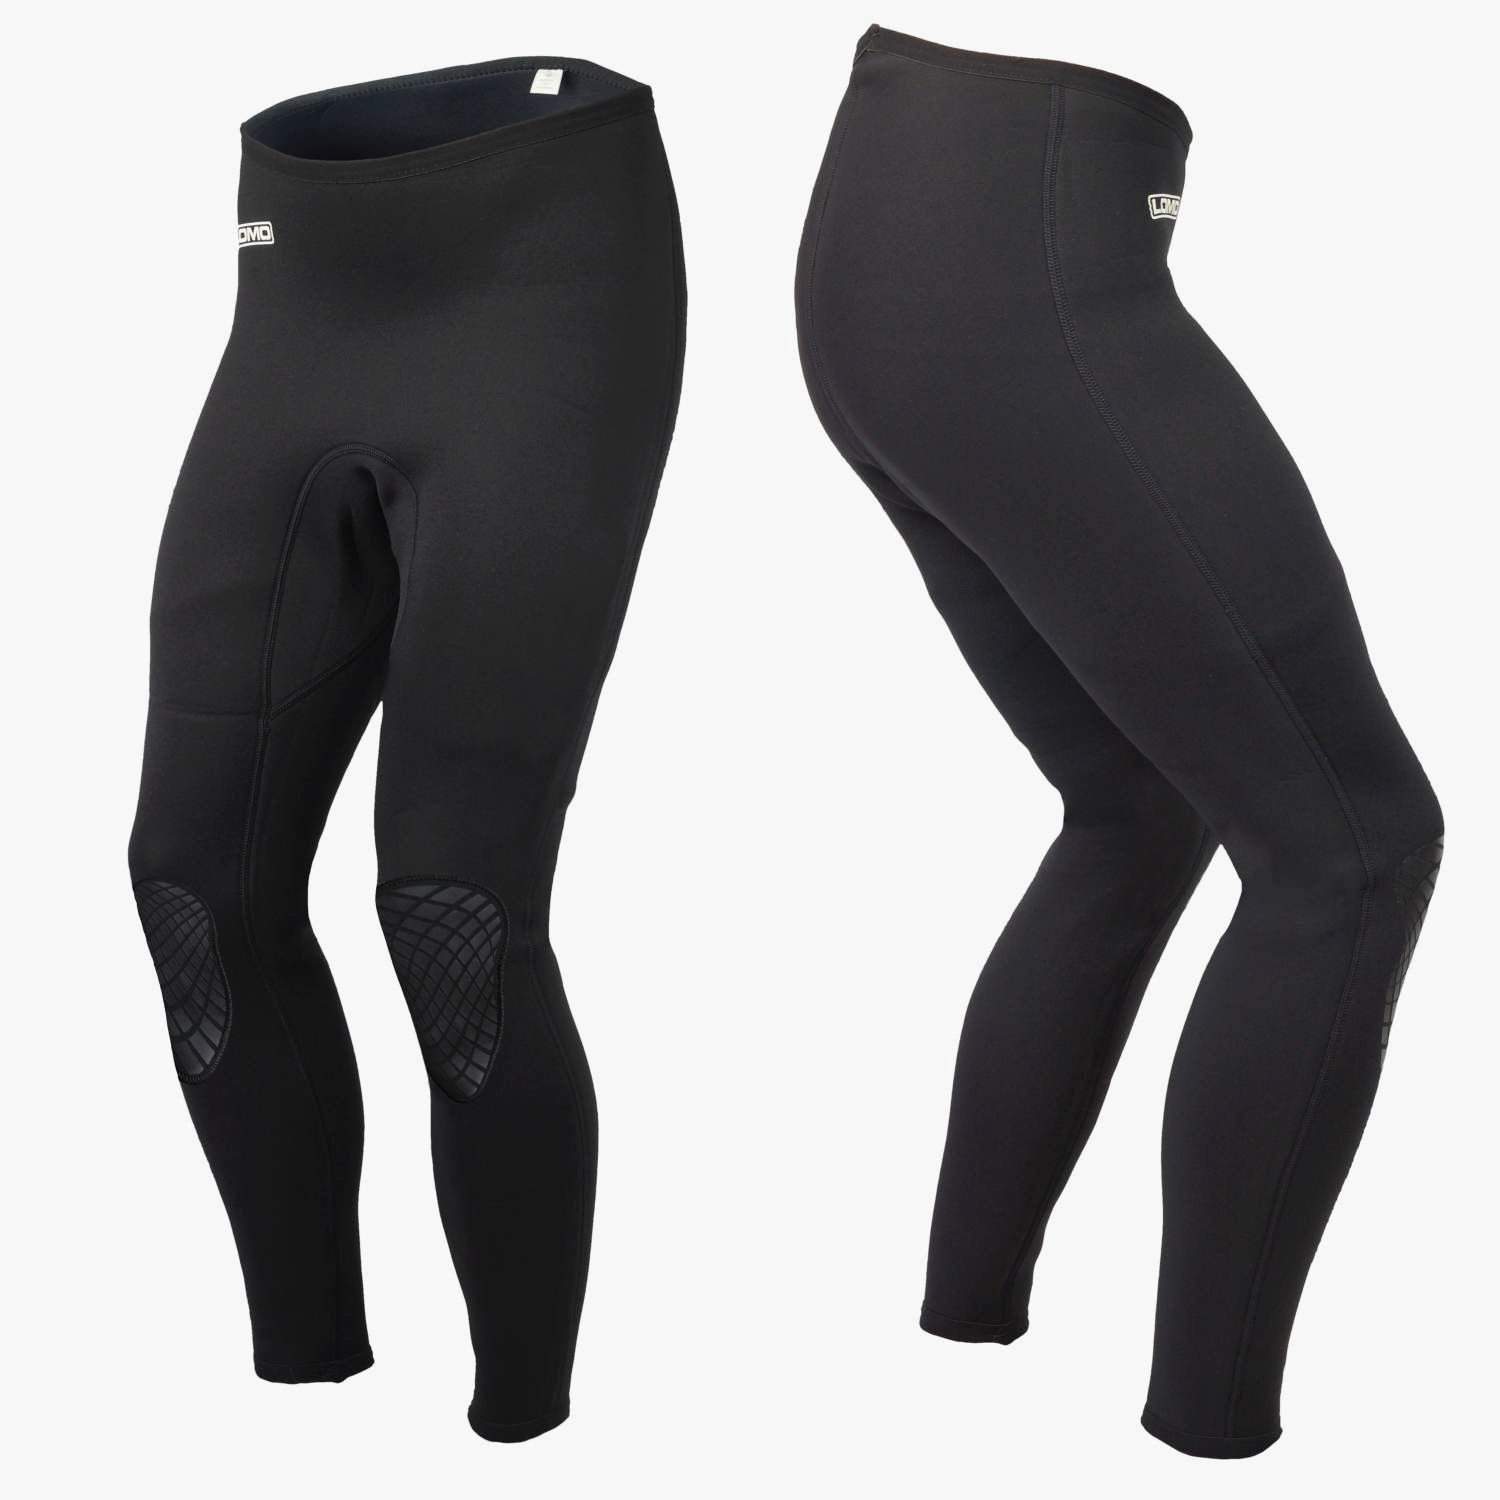 Mens Wetsuit Pants 2mm Tight Trousers Leggings for Swimming Canoe Kayak   eBay